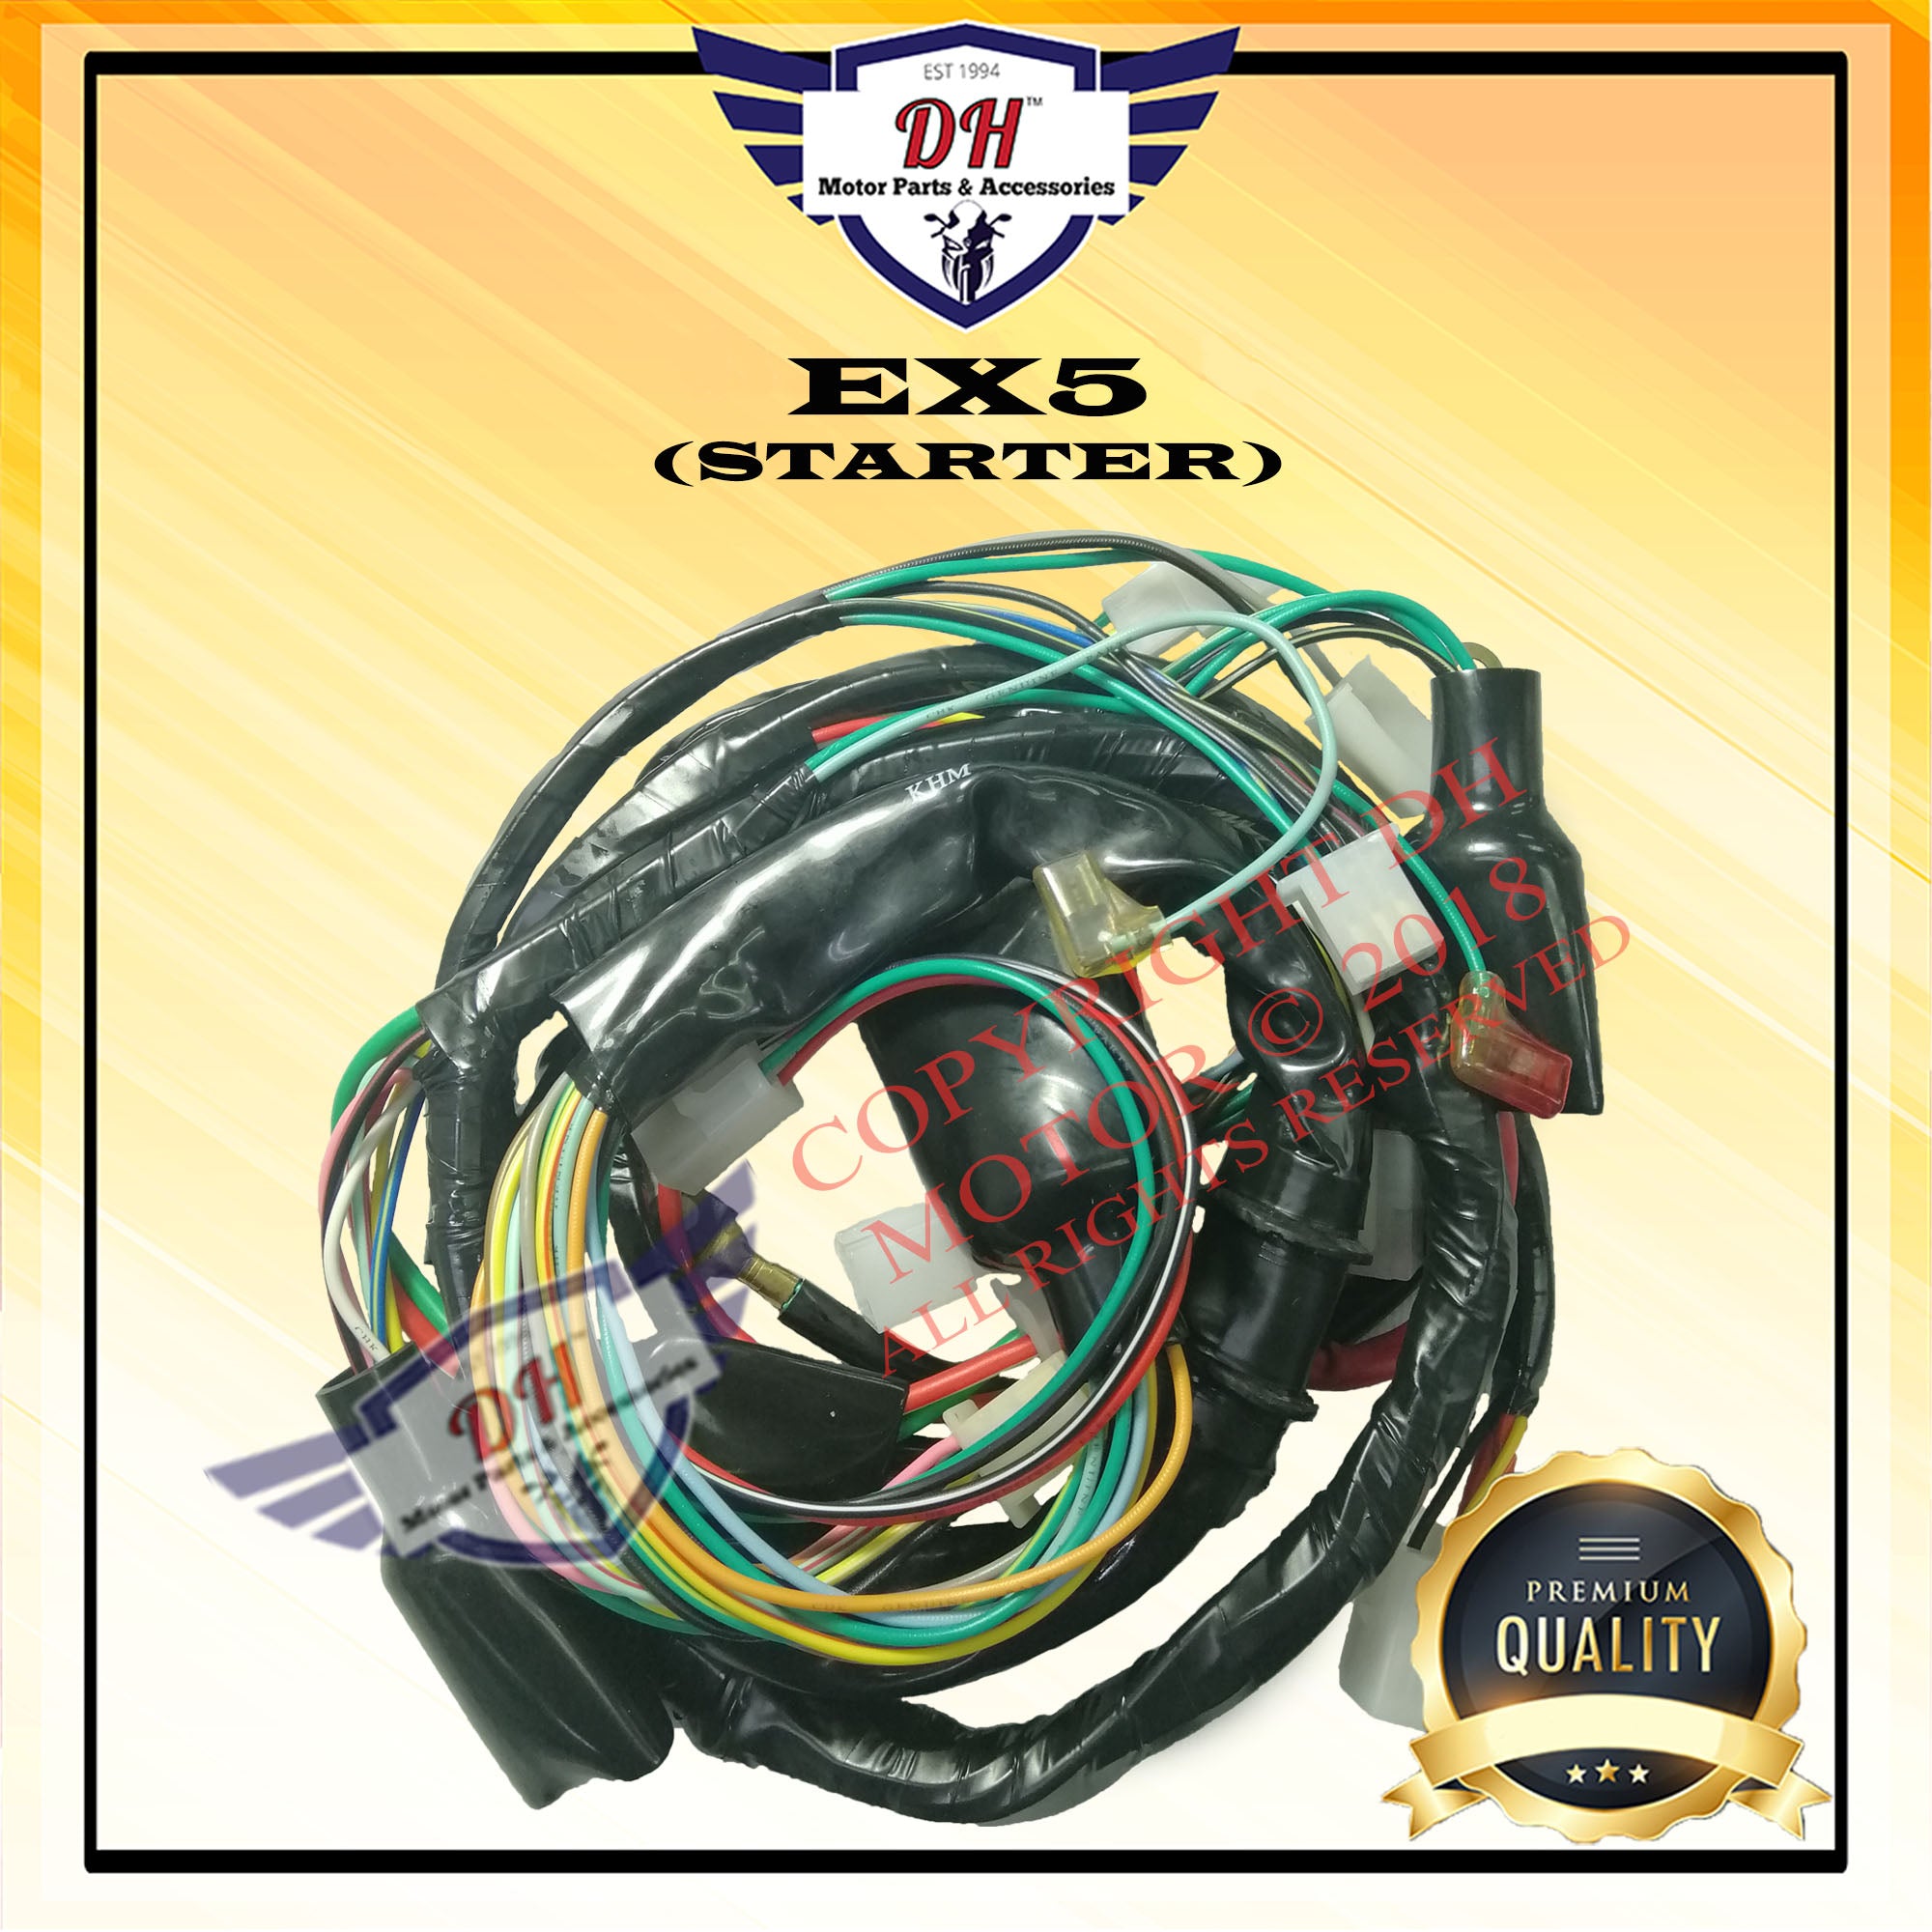 KICK STARTER ) 100% ORIGINAL BSH HONDA EX5 DREAM Wire Harness